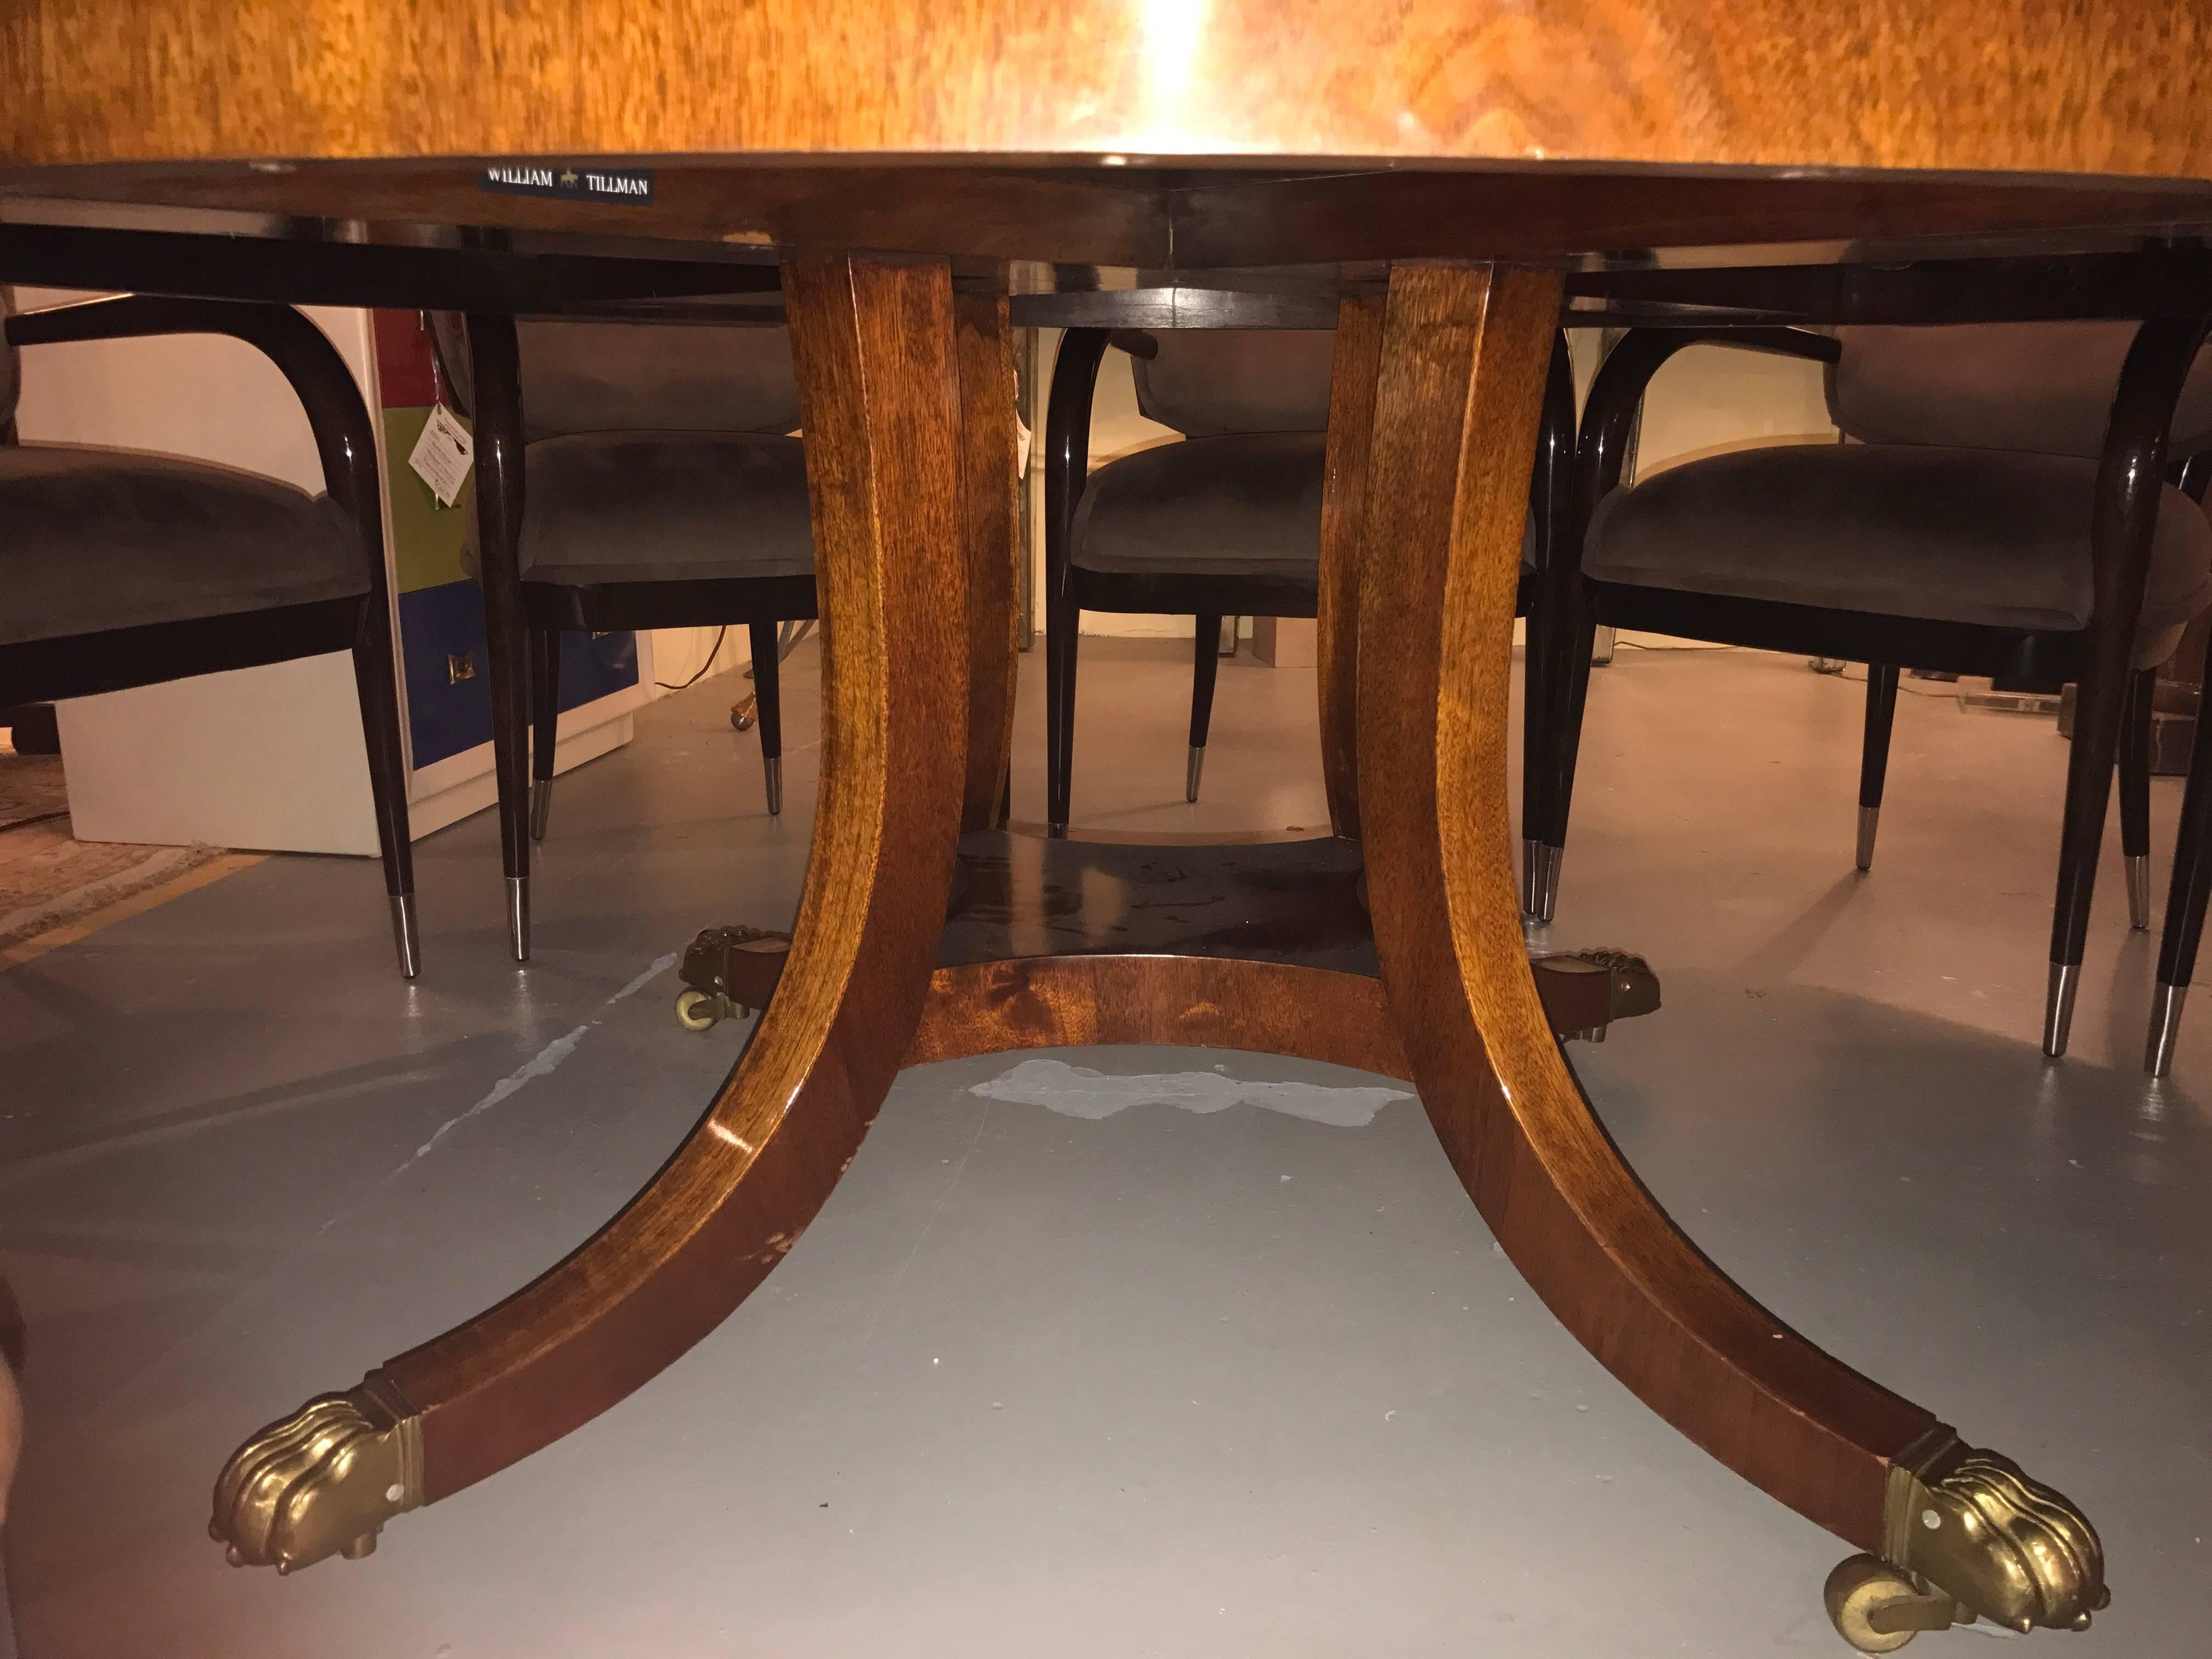 Monumental Circular Dining Room Table by William Tillman 1